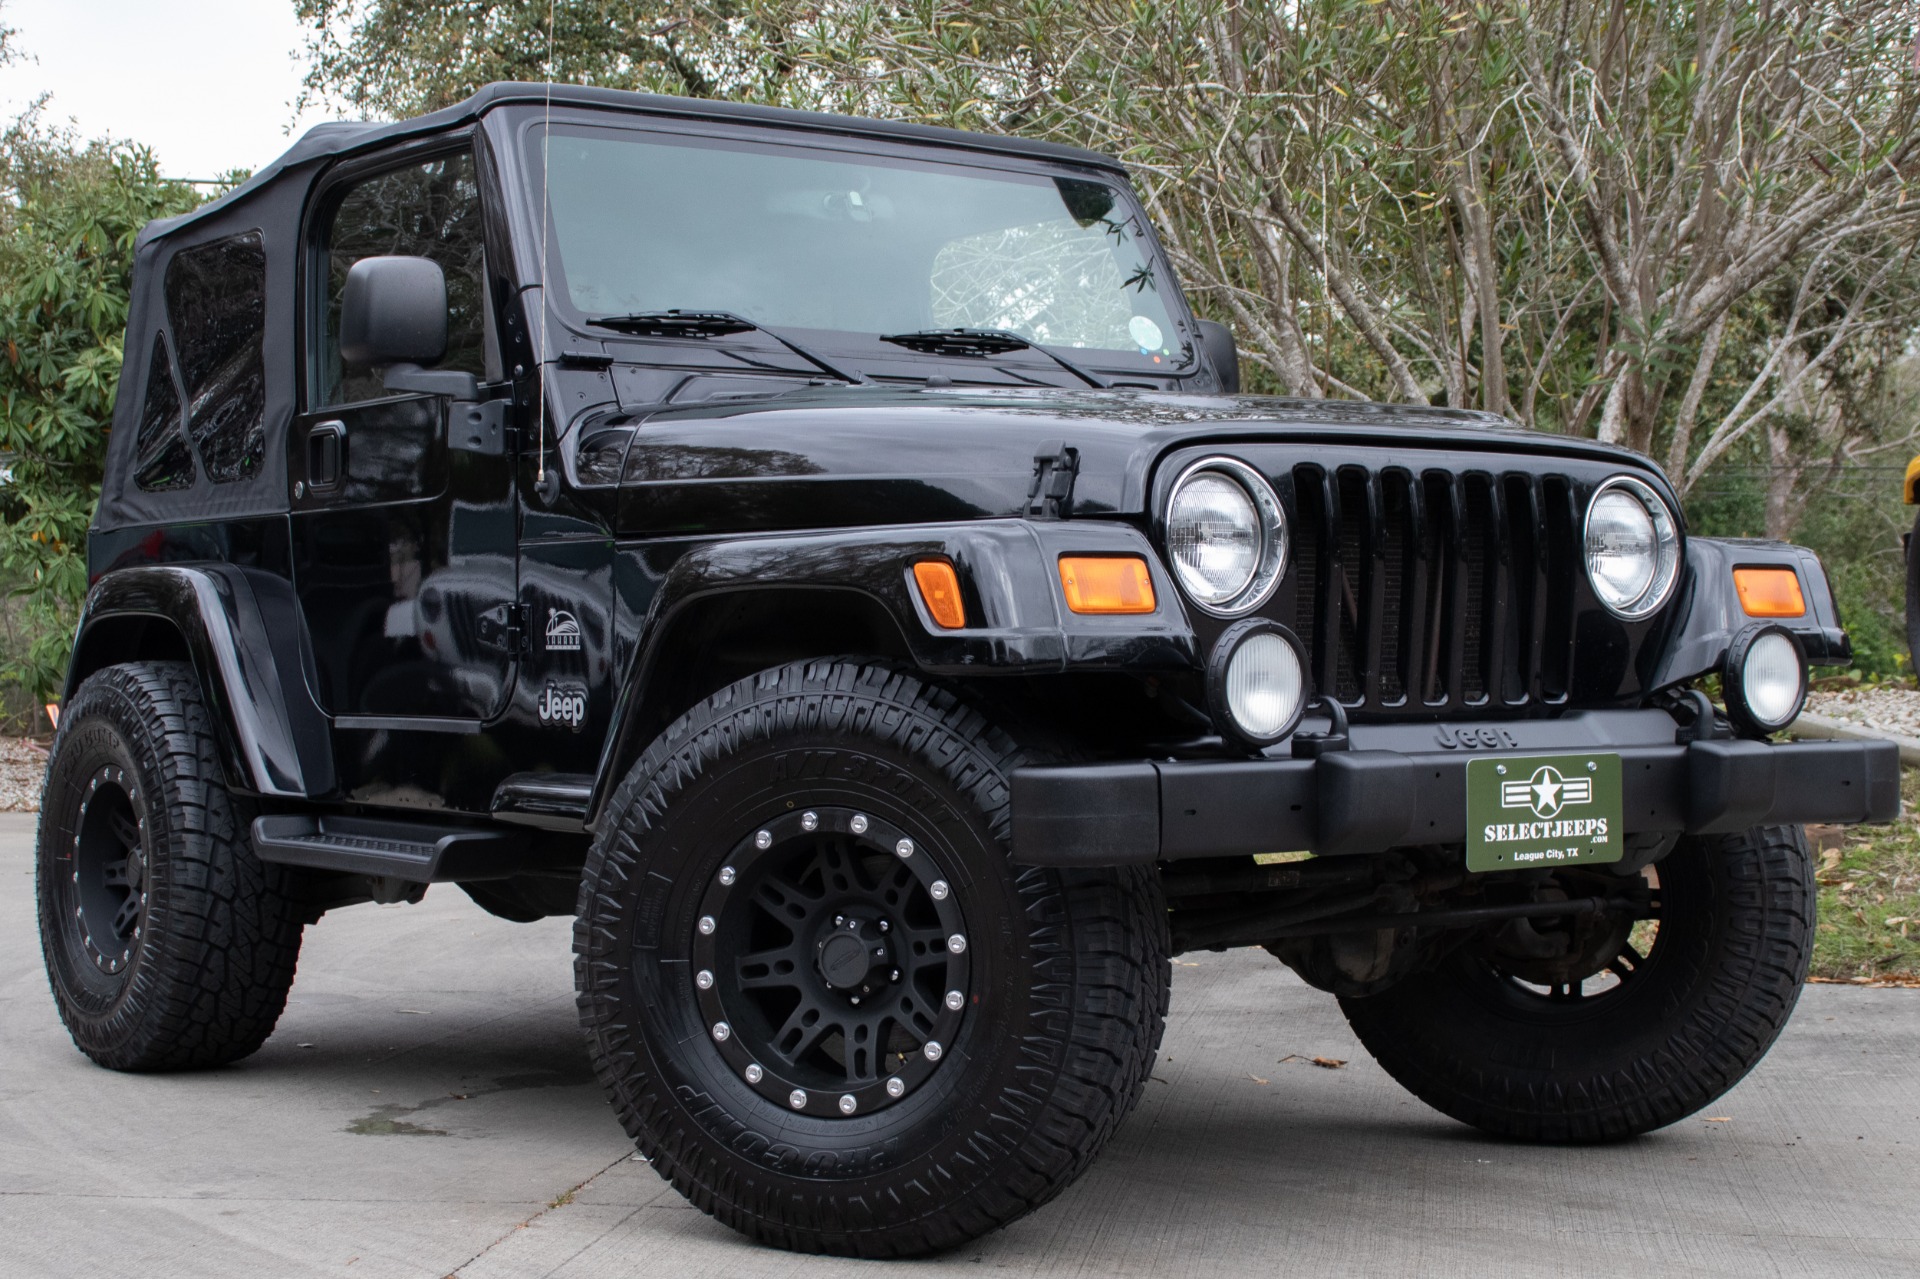 Used 2004 Jeep Wrangler Sahara For Sale ($23,995) | Select Jeeps Inc. Stock  #785827